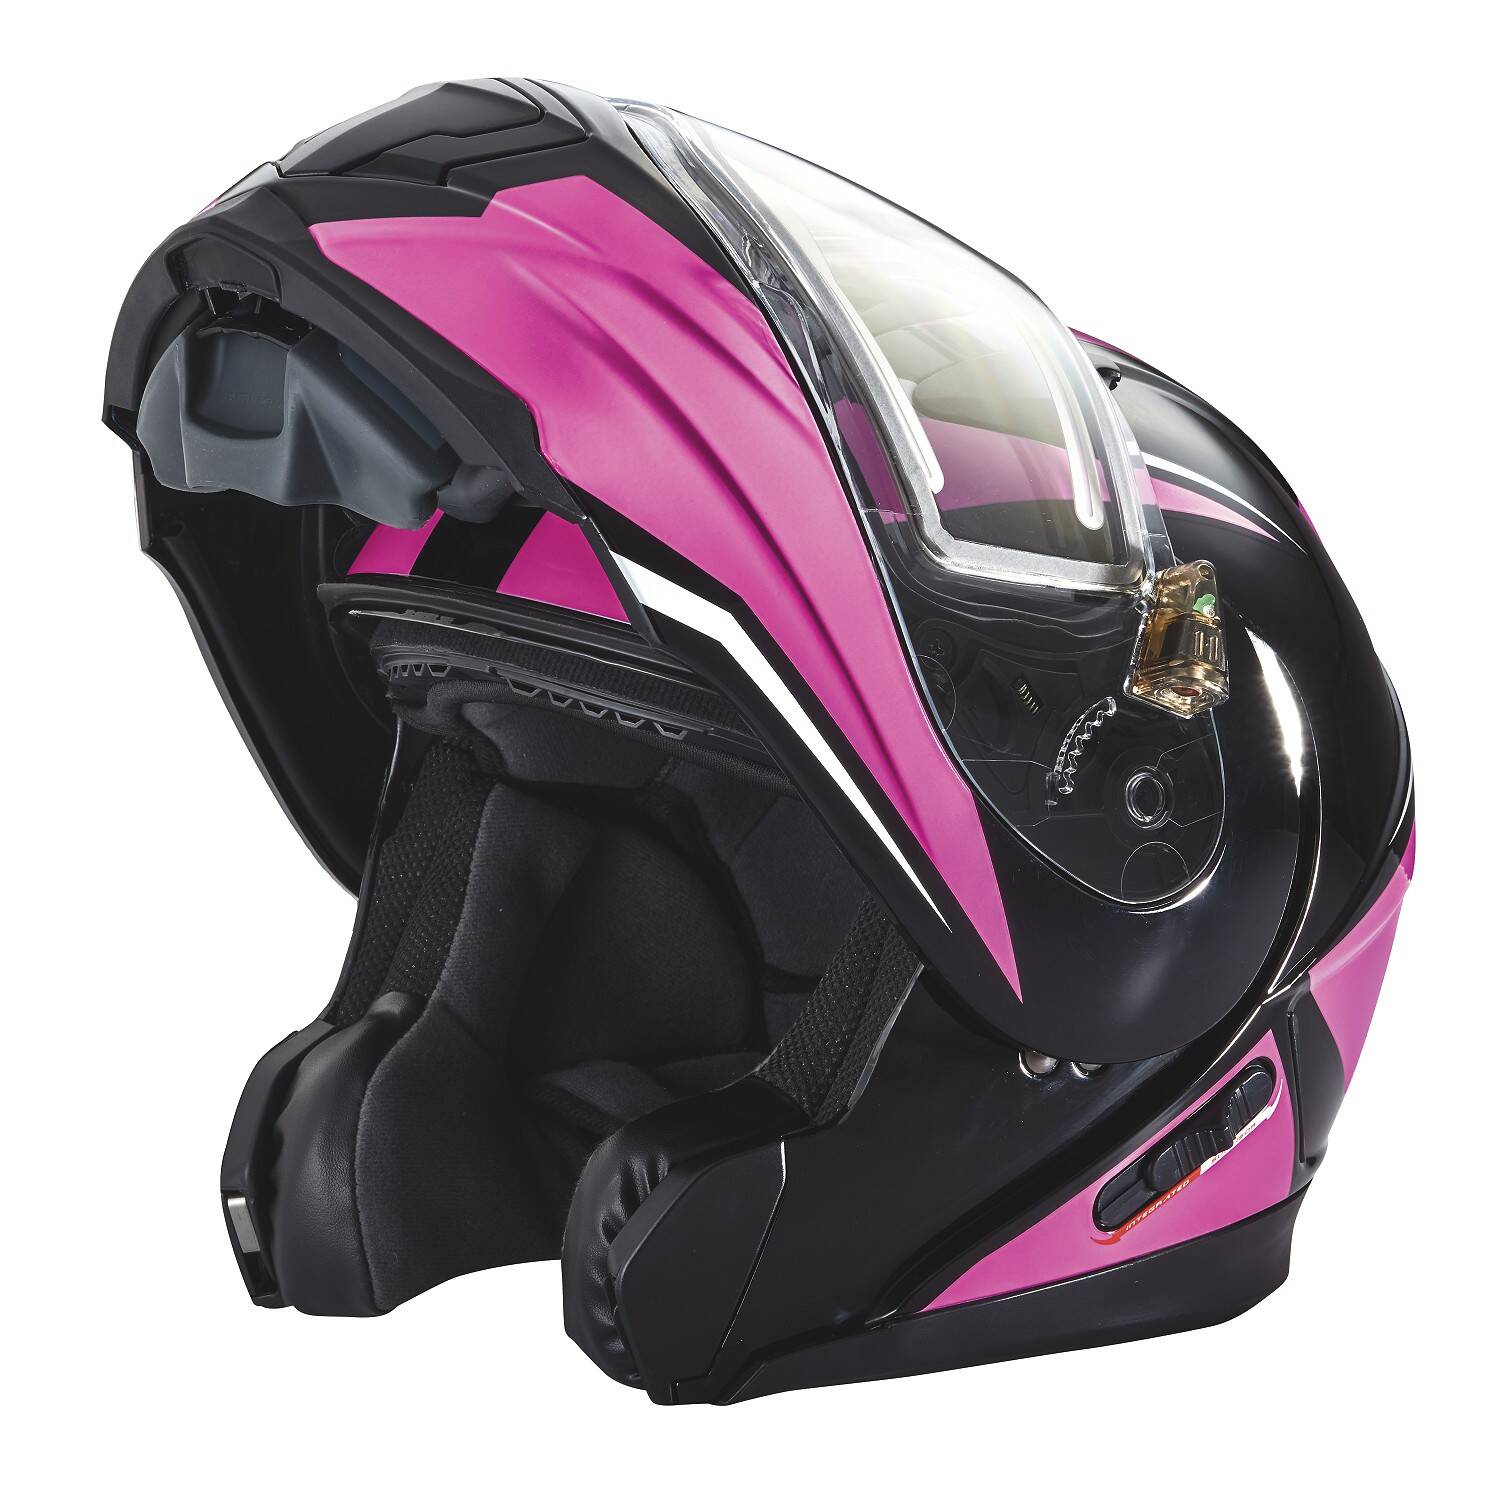 Polaris Modular 2.0 Adult Helmet with Electric Shield | eBay